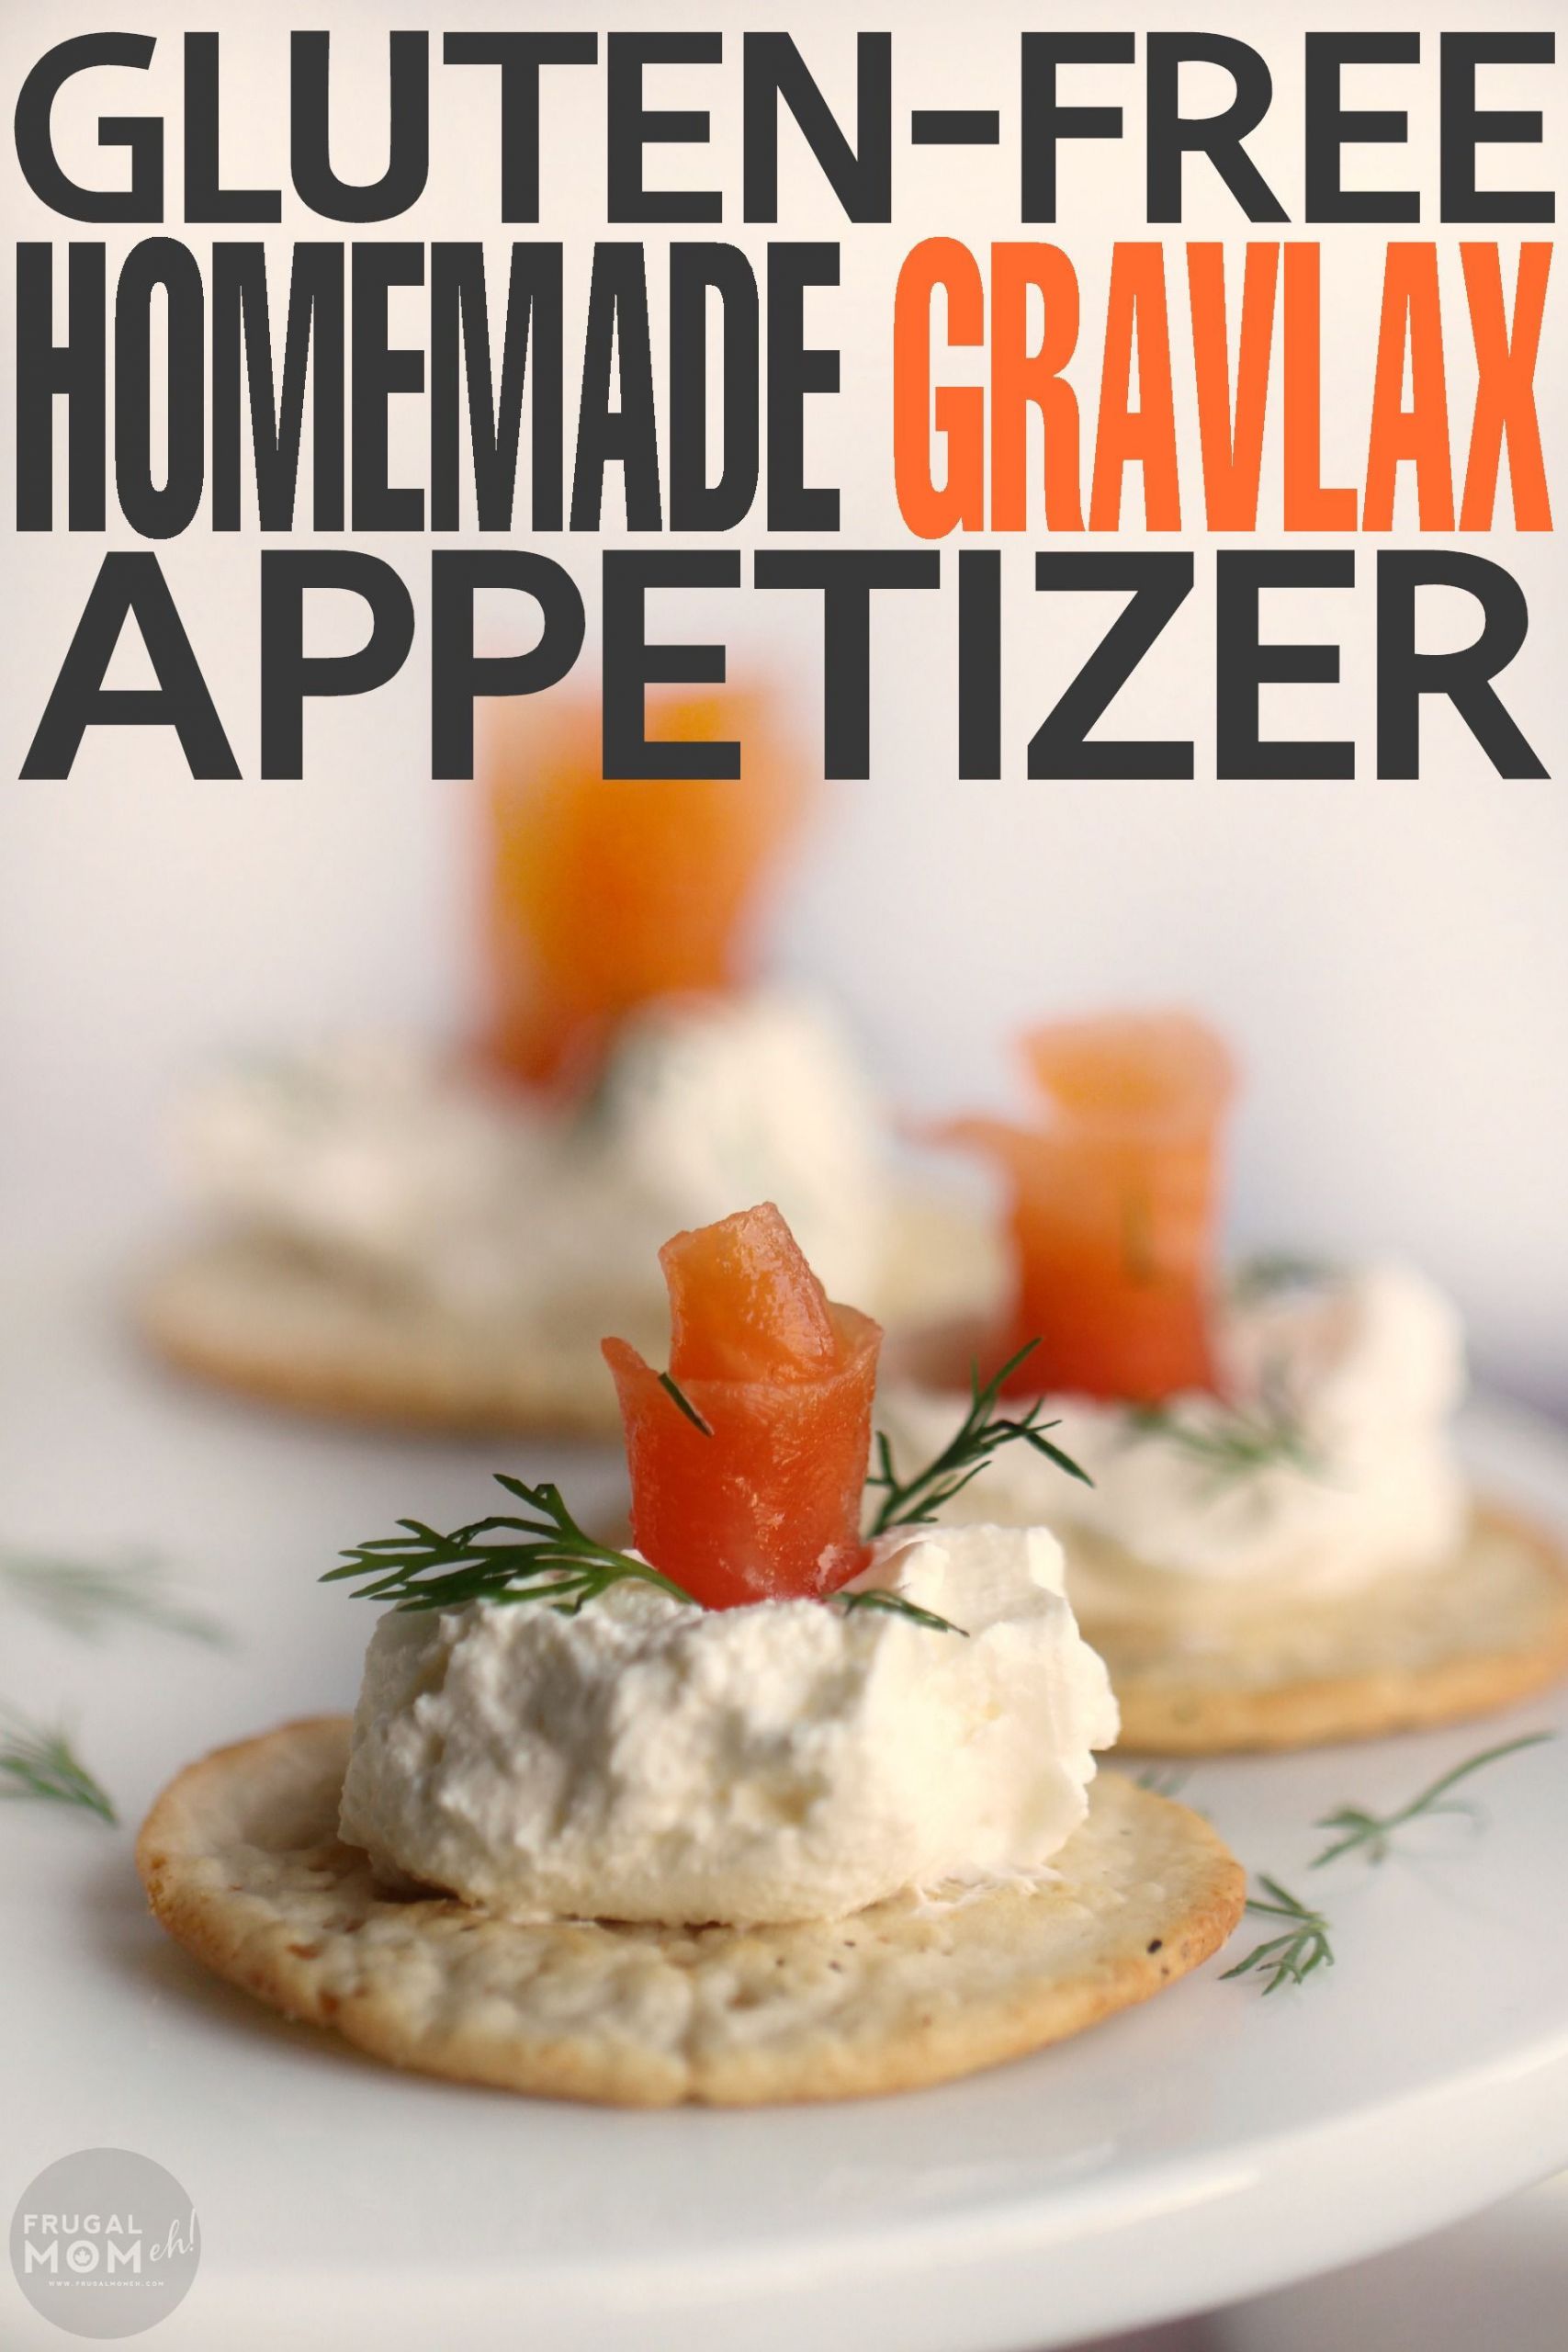 Gluten Free Appetizers To Buy
 Gluten Free Homemade Gravlax Appetizer